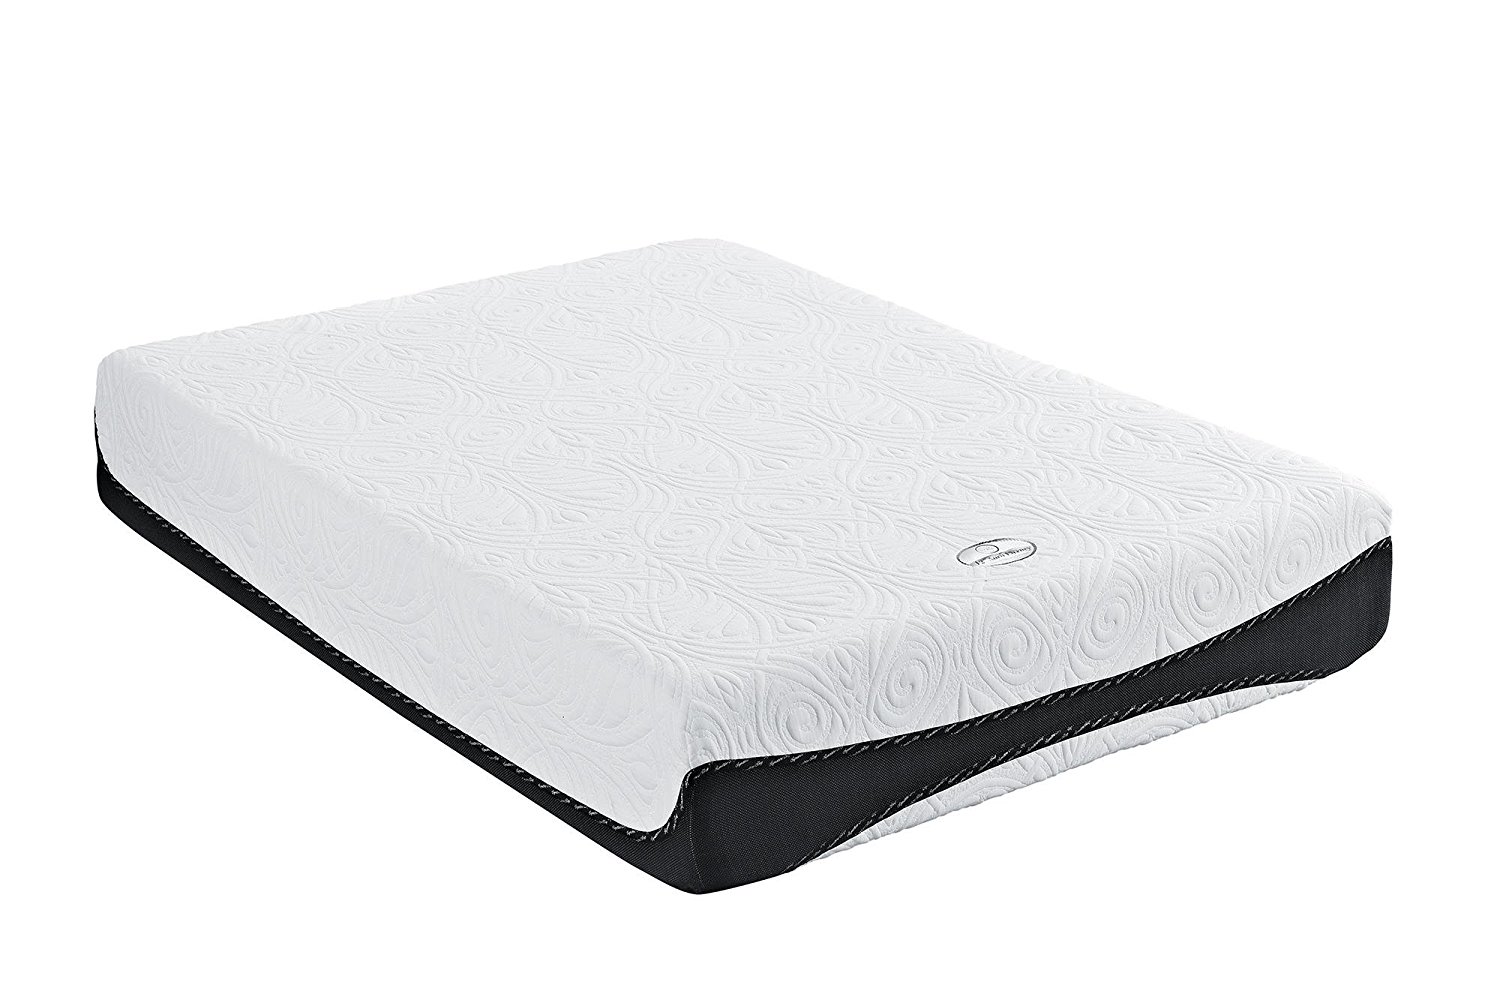 snuggle home 12 deluxe gel memory foam mattress